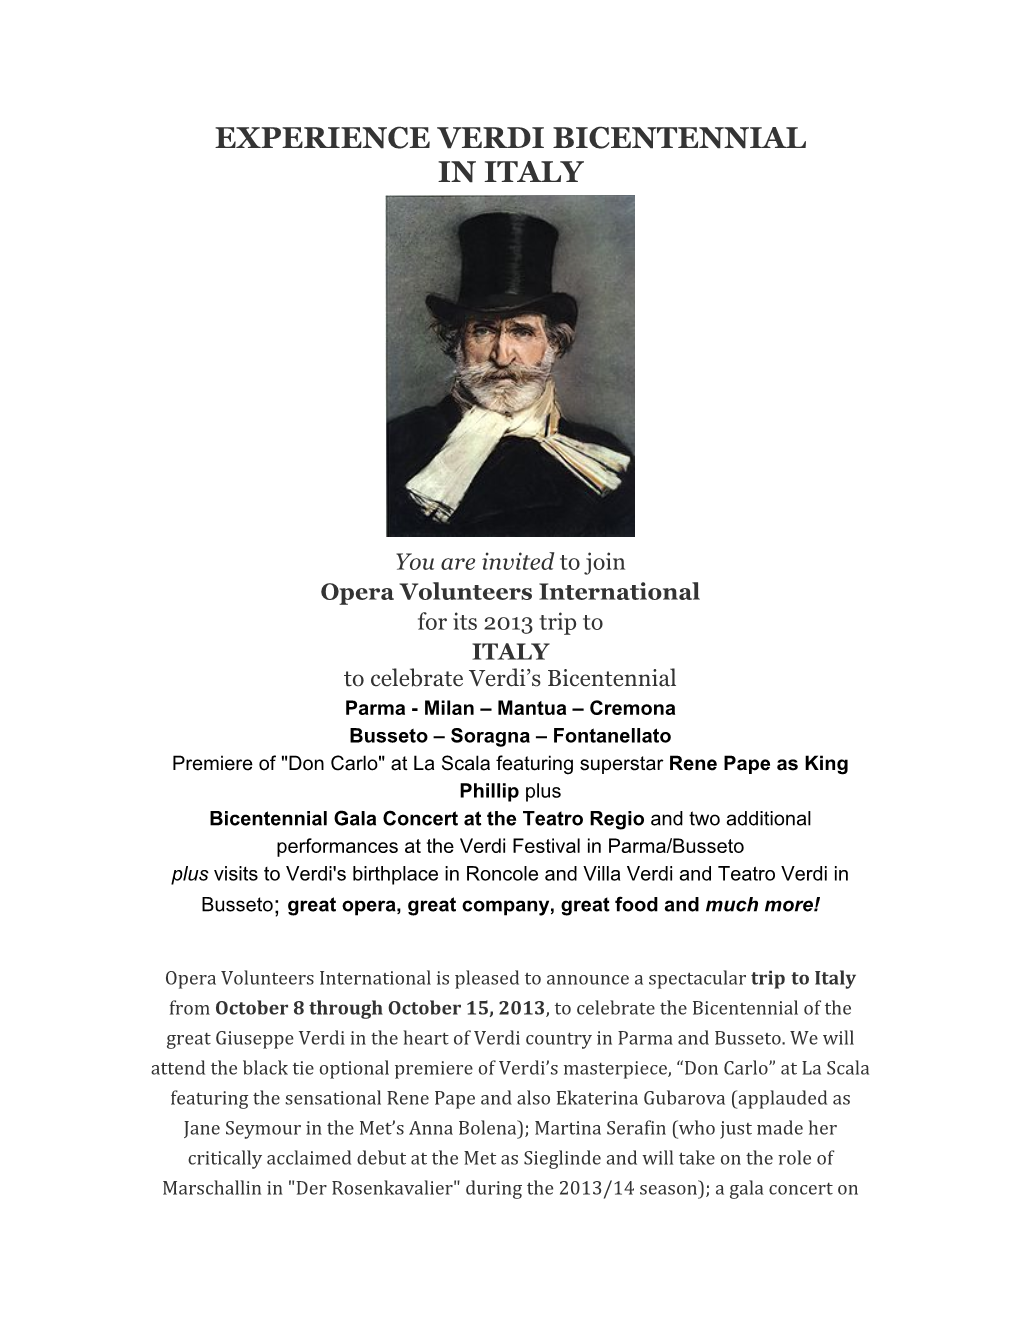 Experience Verdi Bicentennial in Italy